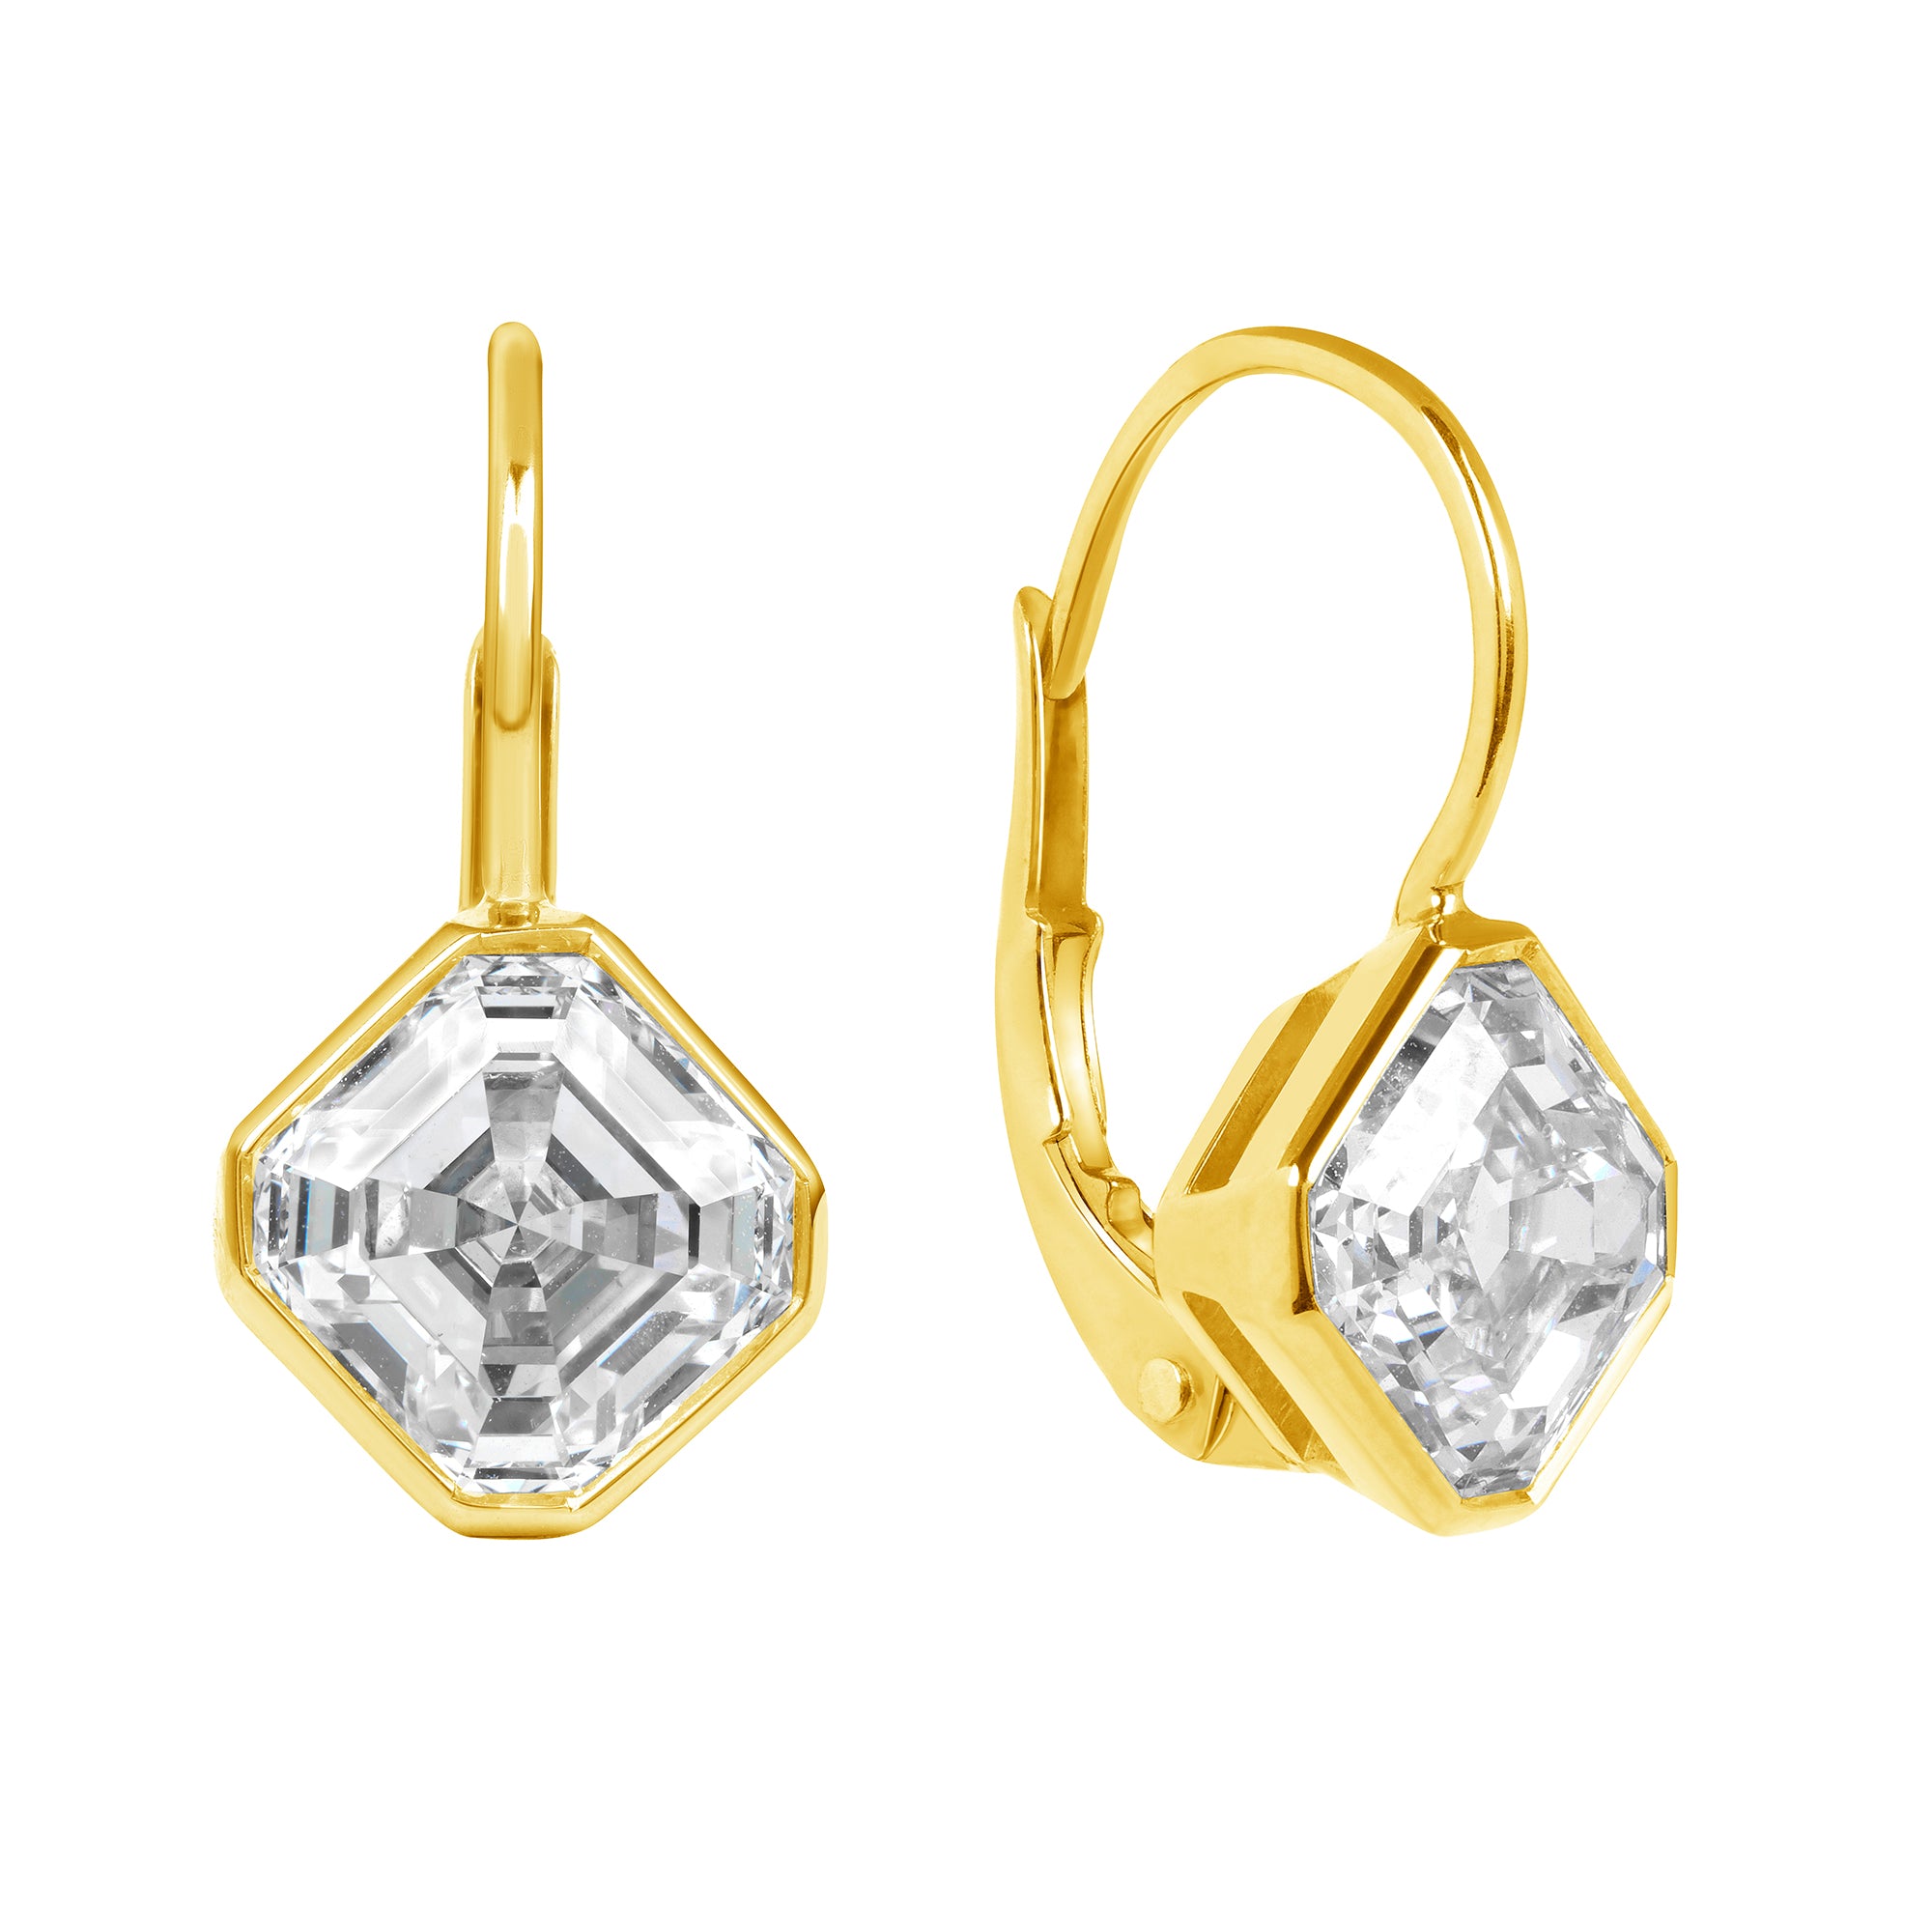 Asscher Cut Bezel Set Diamond Dangle Earrings in 18K Yellow Gold, GIA Certified